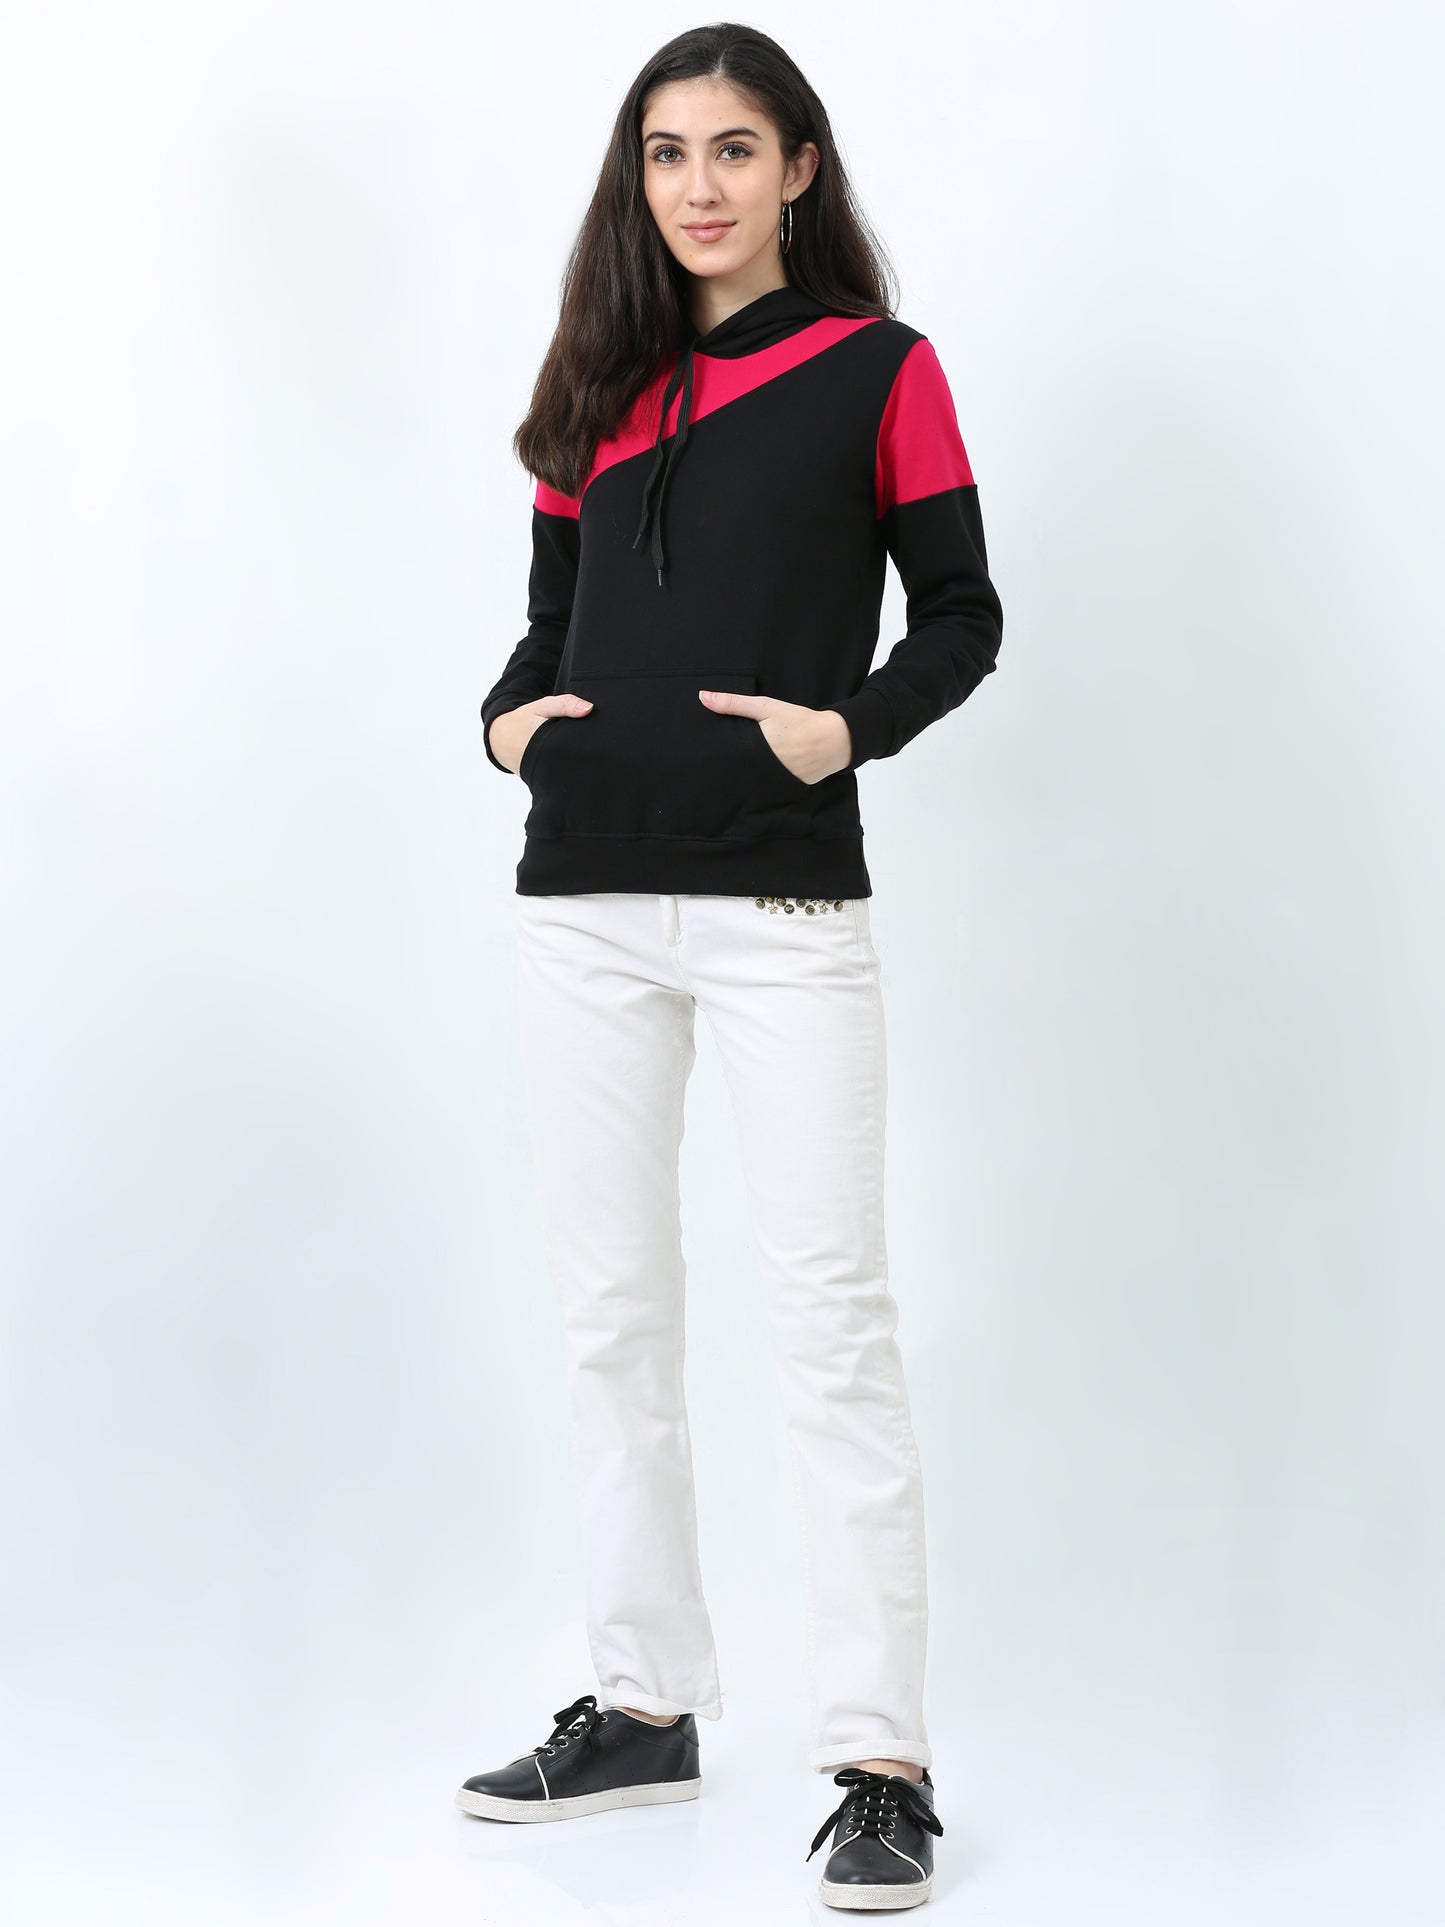 Women's Cotton Color Block Pinkblack Color Sweatshirt Hoodies